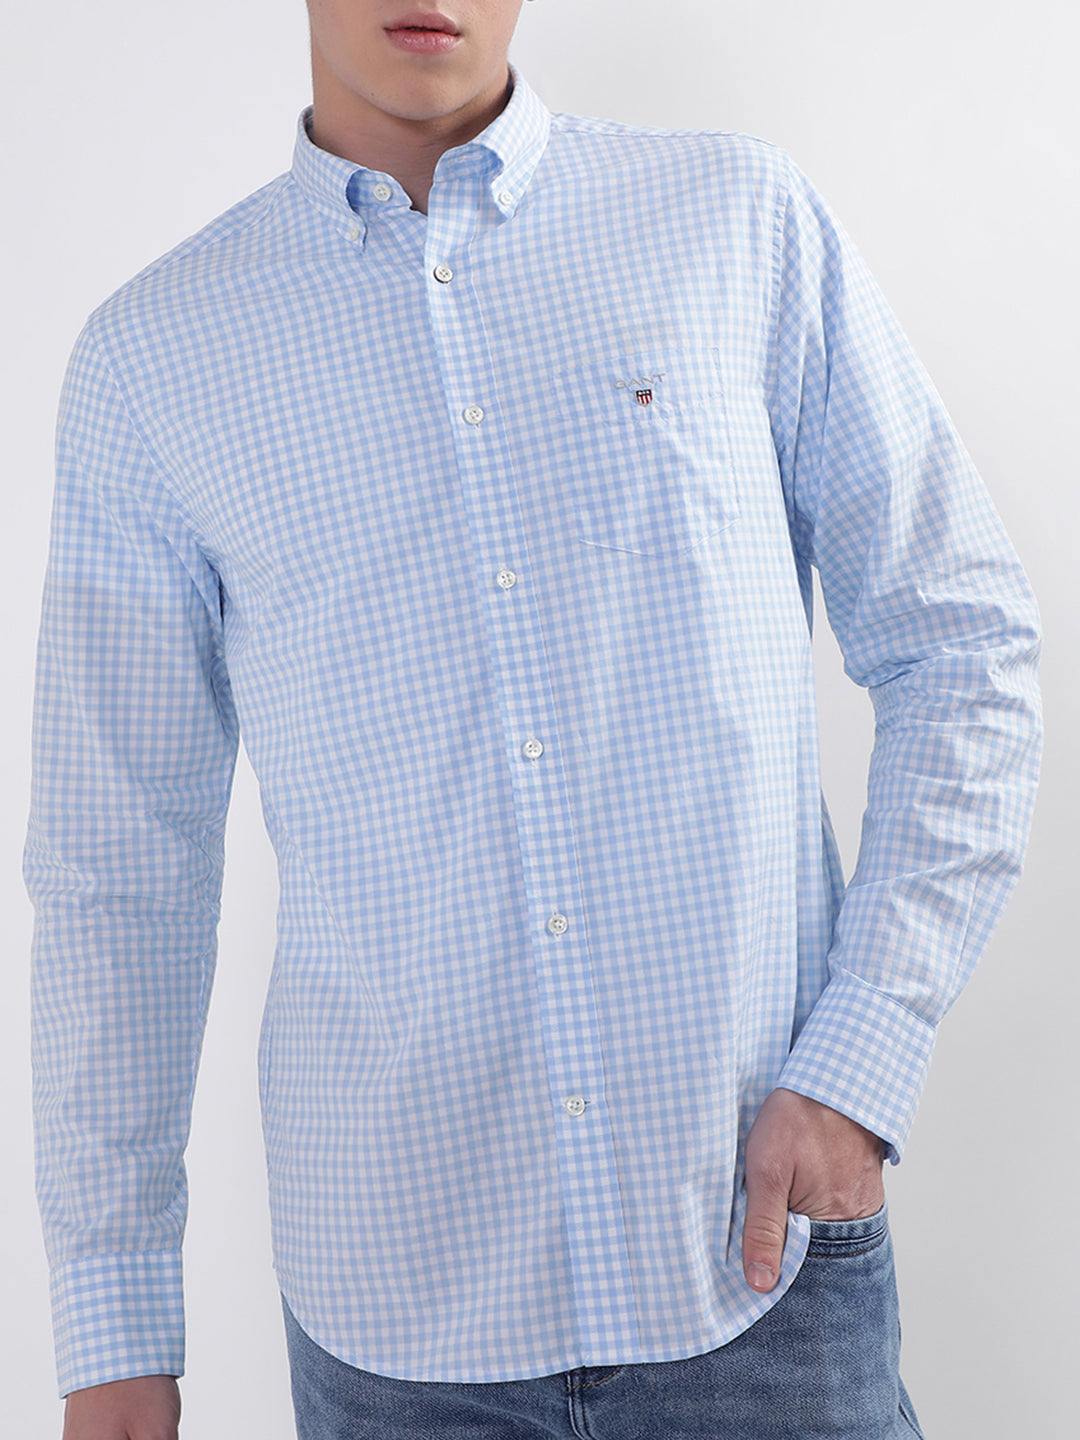 Gant Blue Broadcloth Gingham Checked Regular Fit Shirt